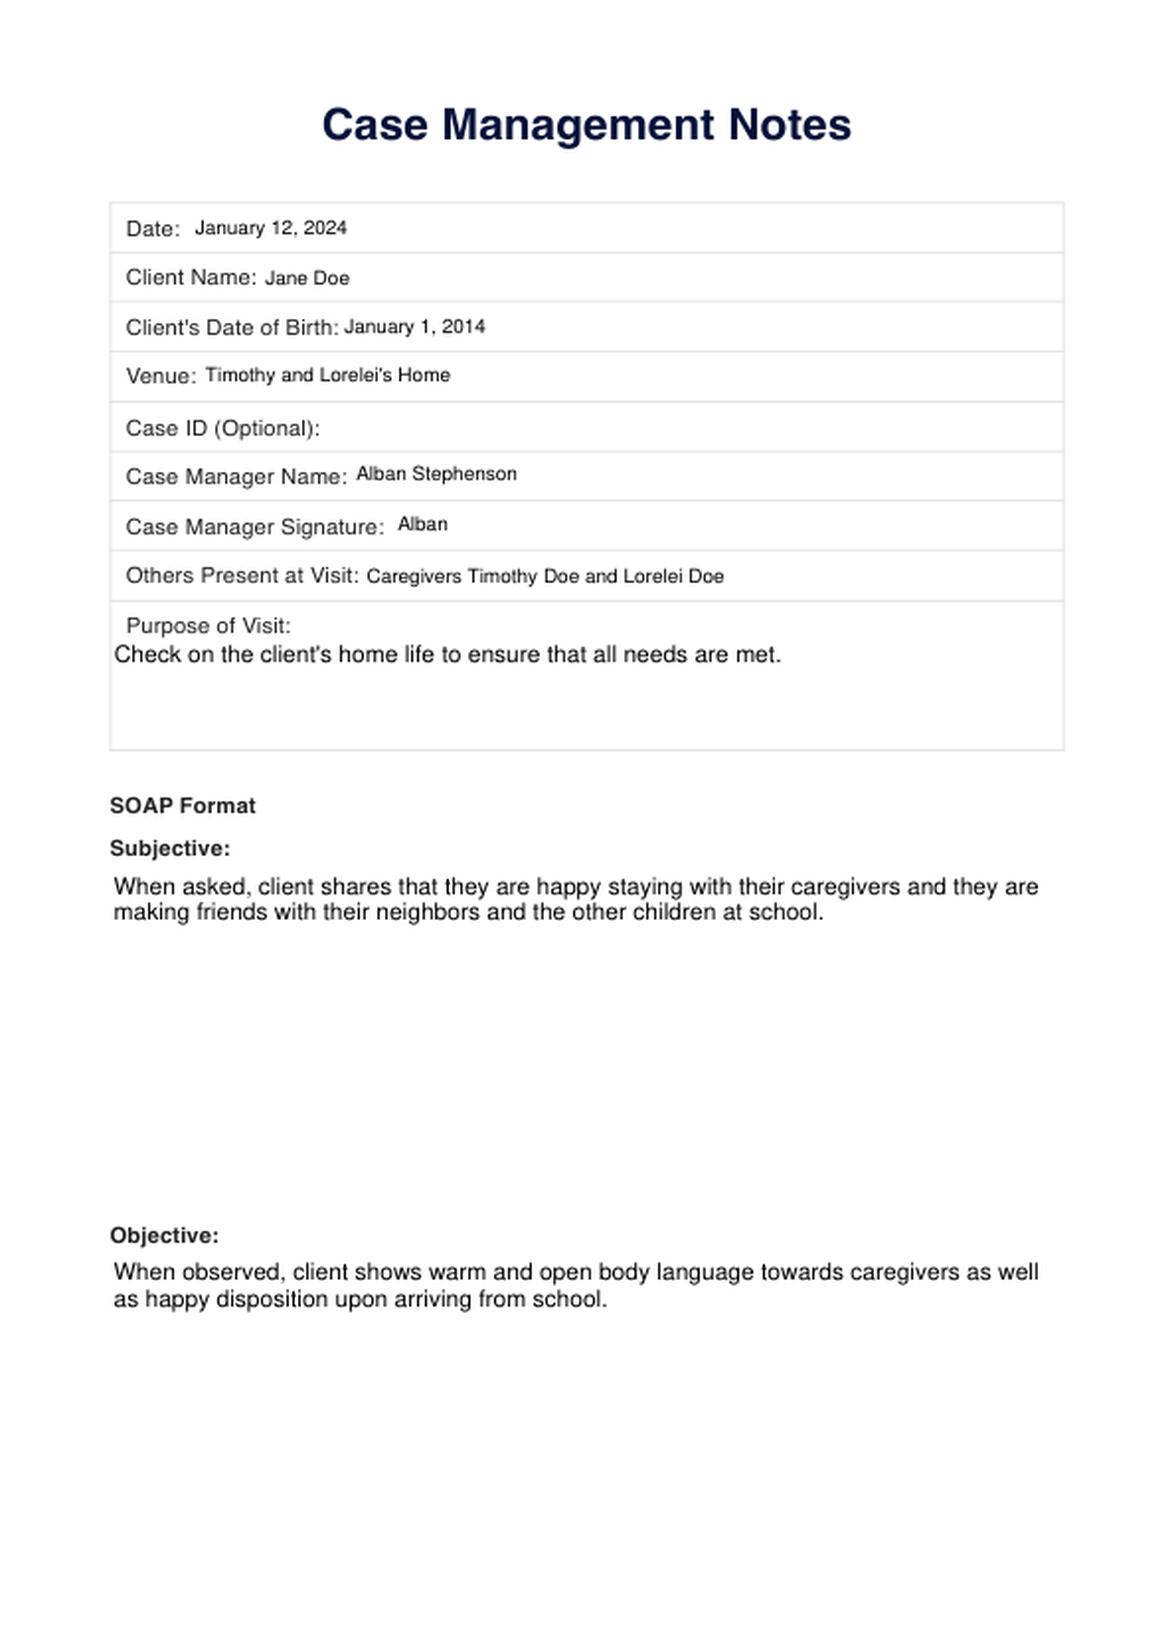 Case Management Notes PDF Example